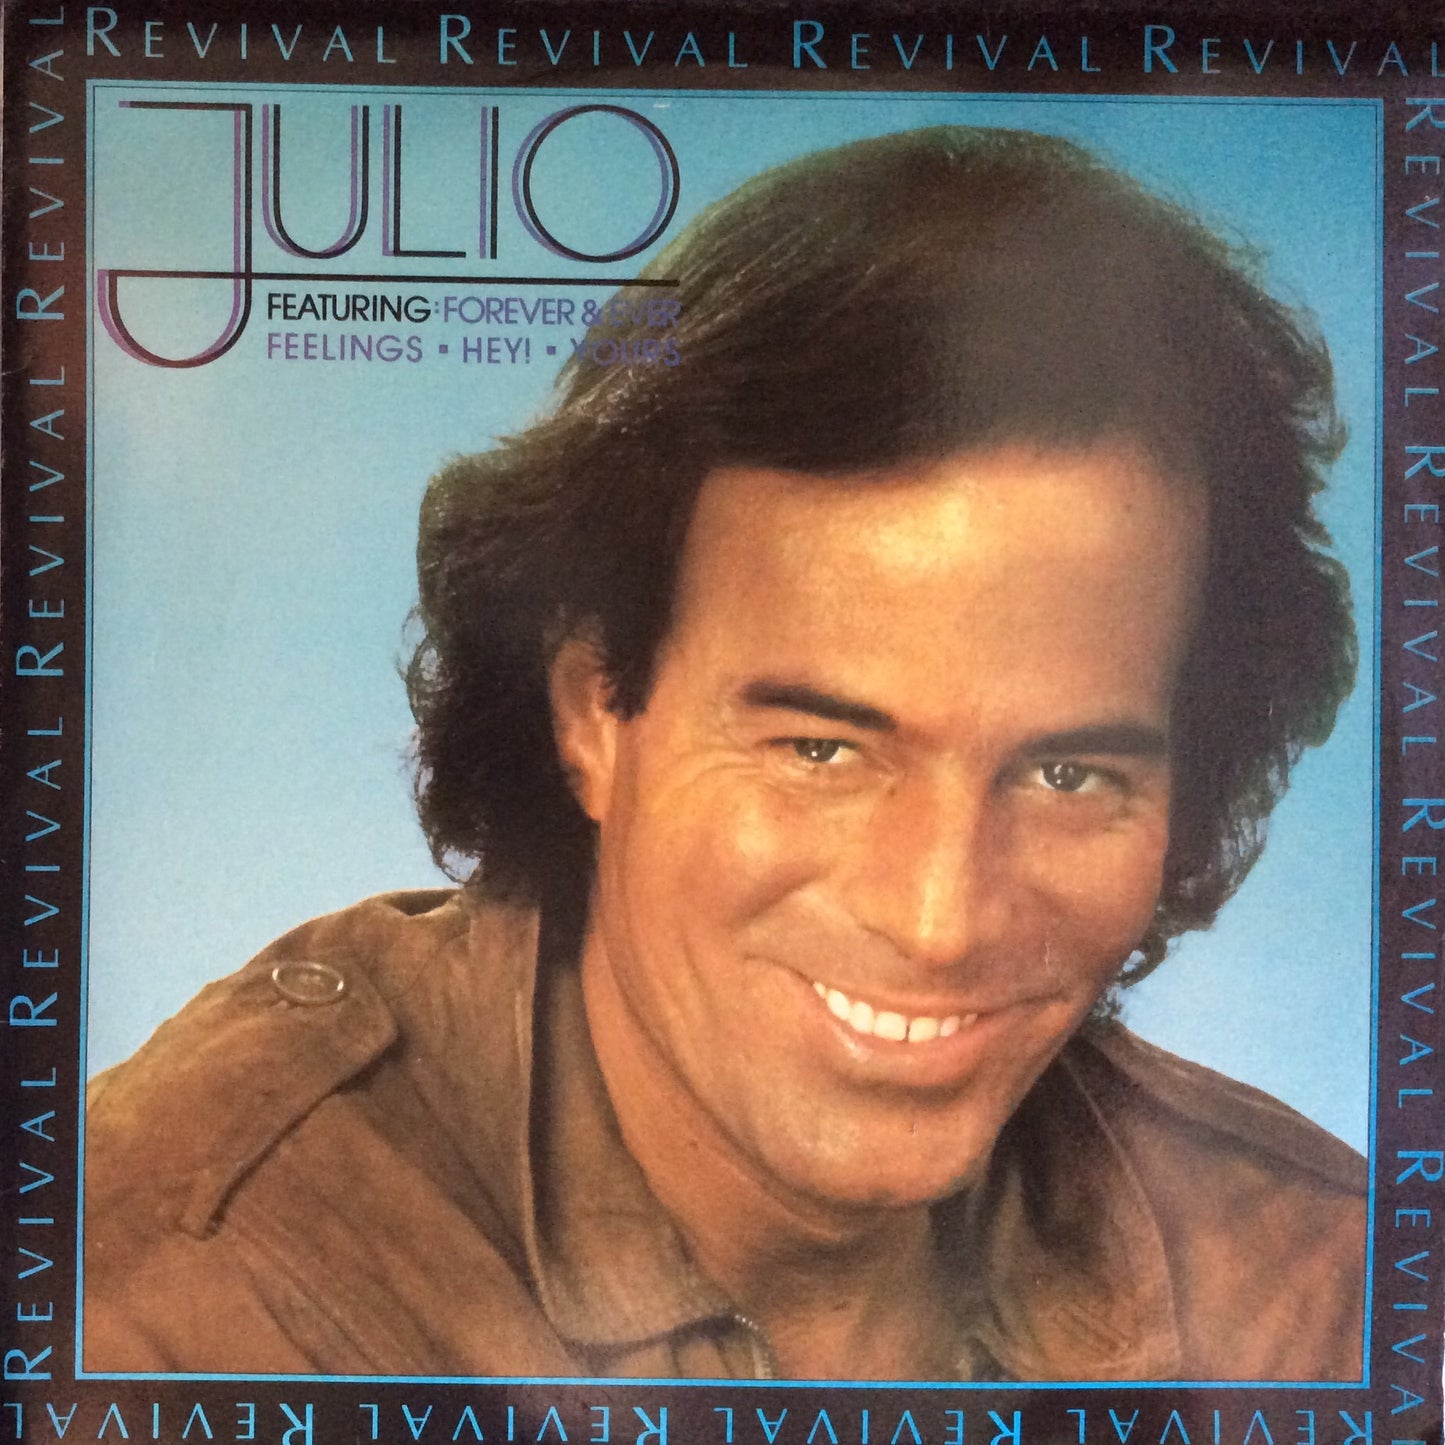 Julio Iglesias - Revival Series